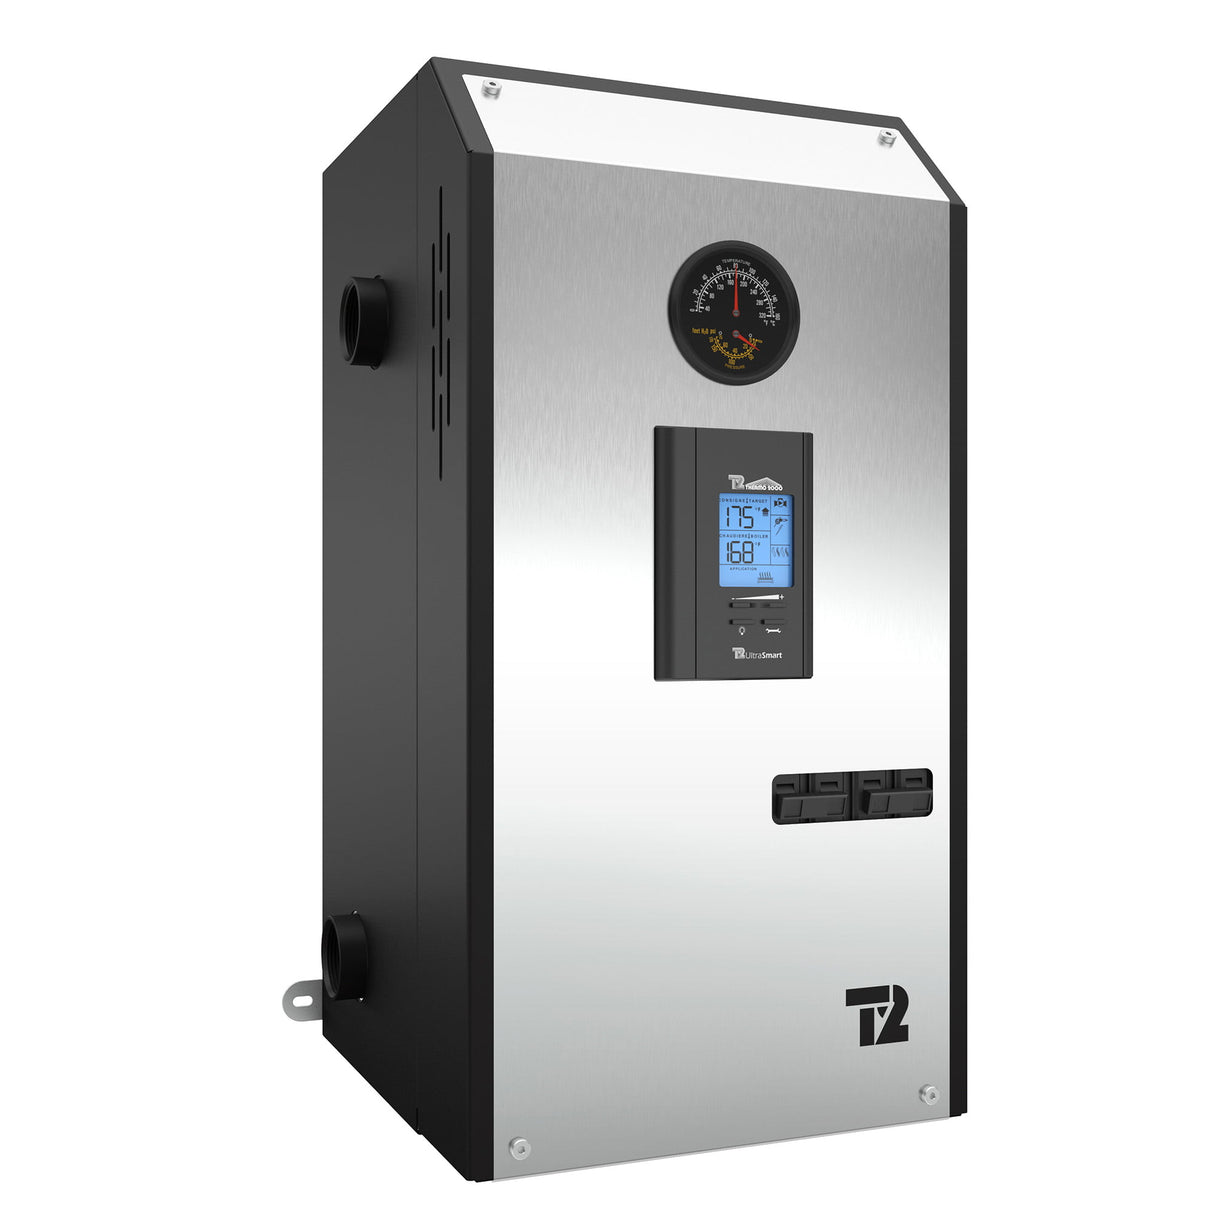 BTH Ultra 29 kW / 98948 Btu - 240V electric boiler